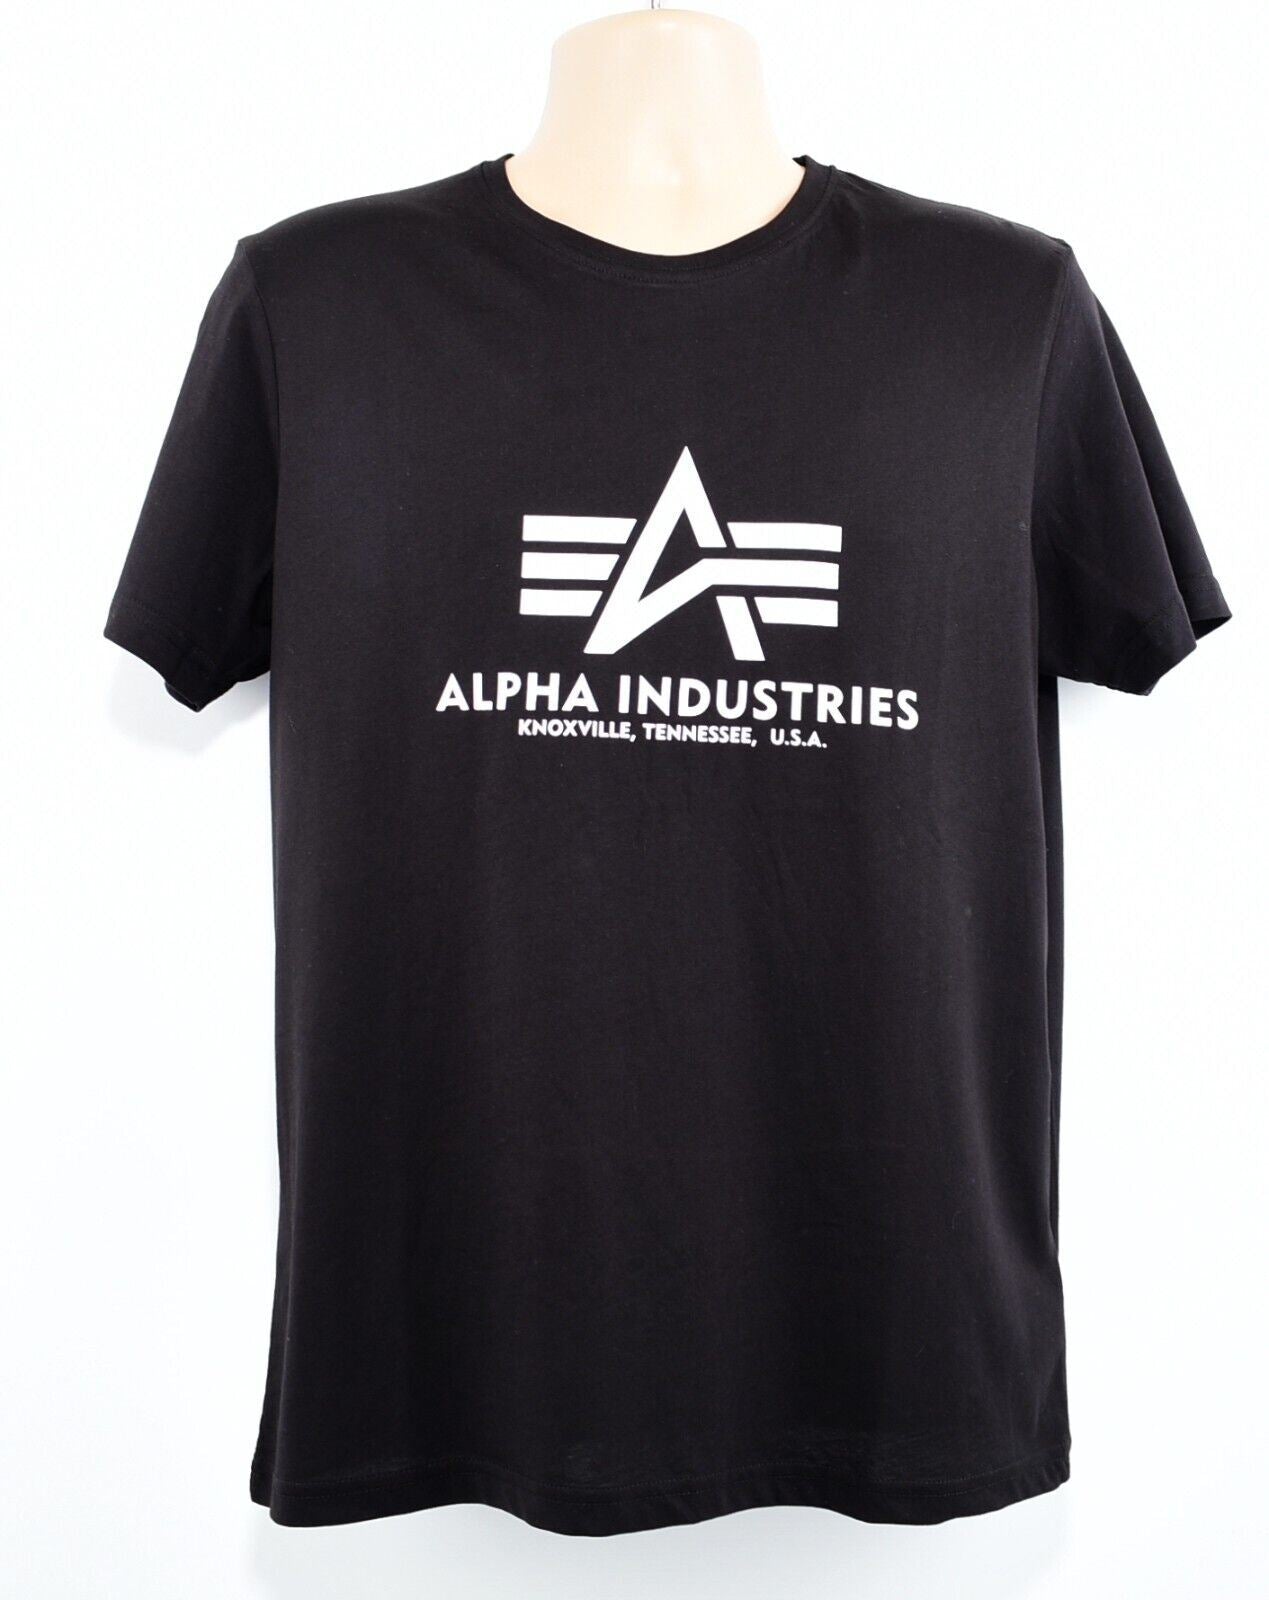 ALPHA INDUSTRIES Men's Crew Neck T-shirt, Black/with White Logo, size M